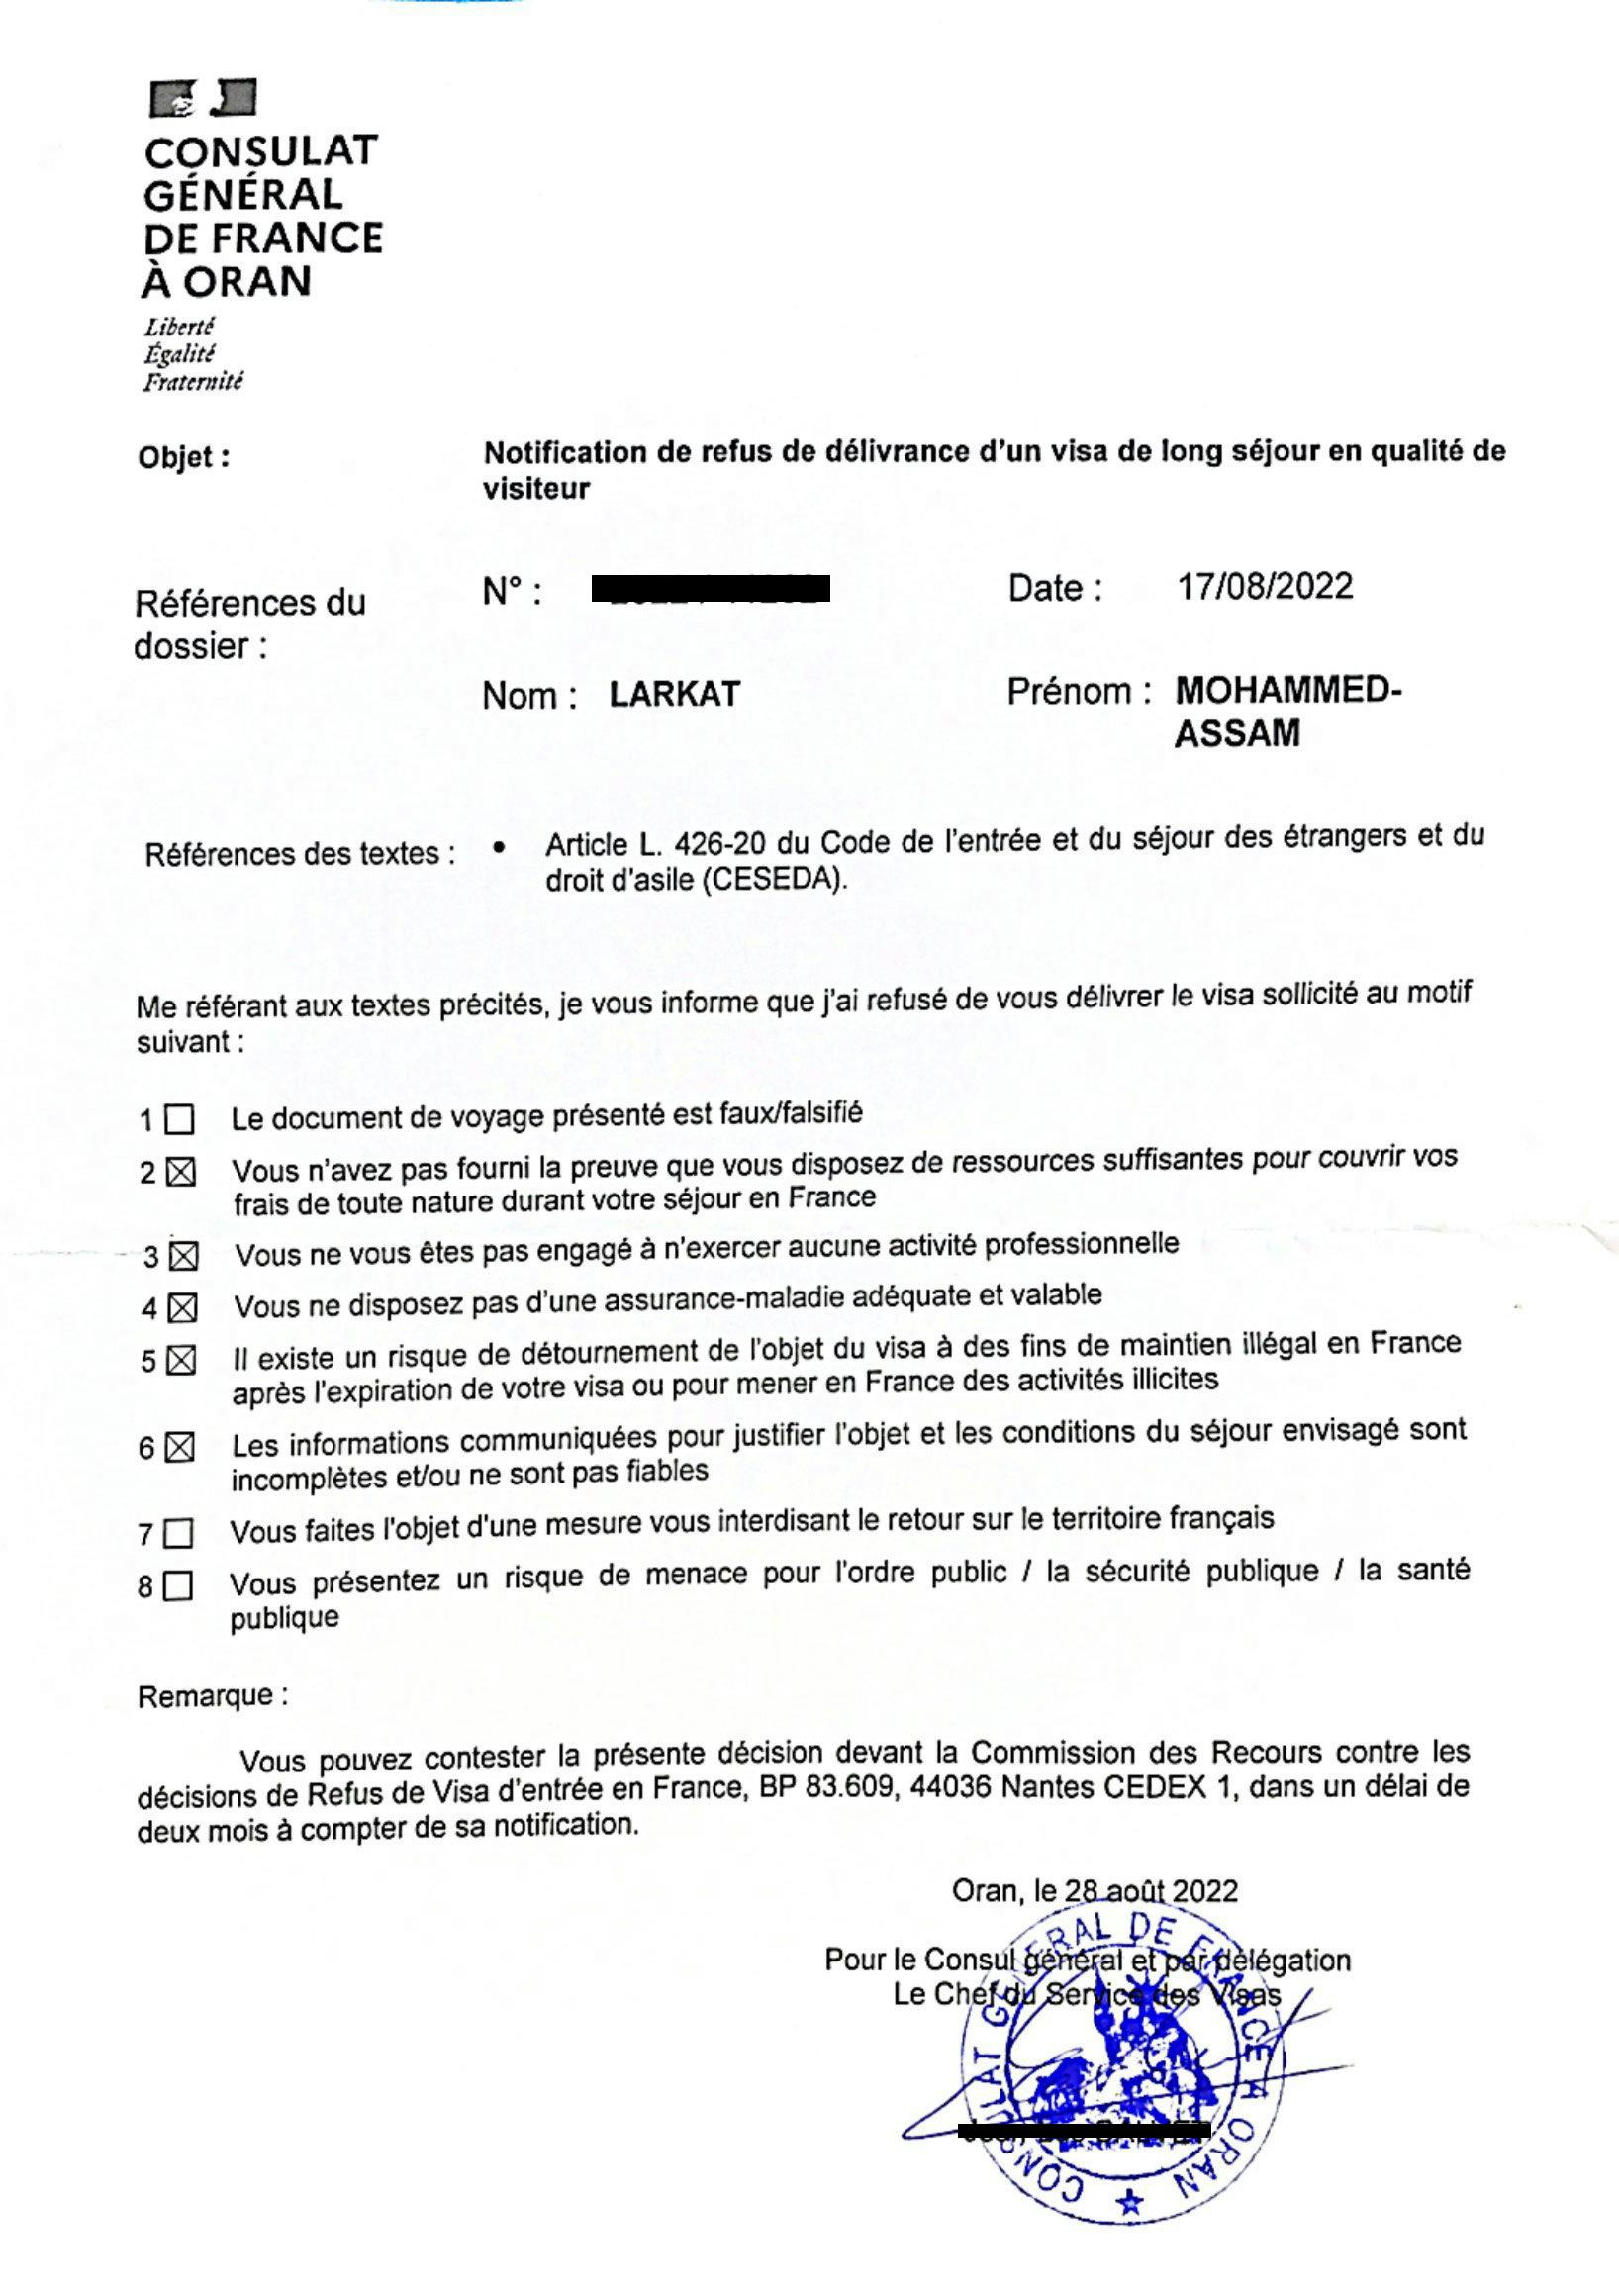 Copy of an official letter refusing the artist a visa to enter France. © Issam Larkat